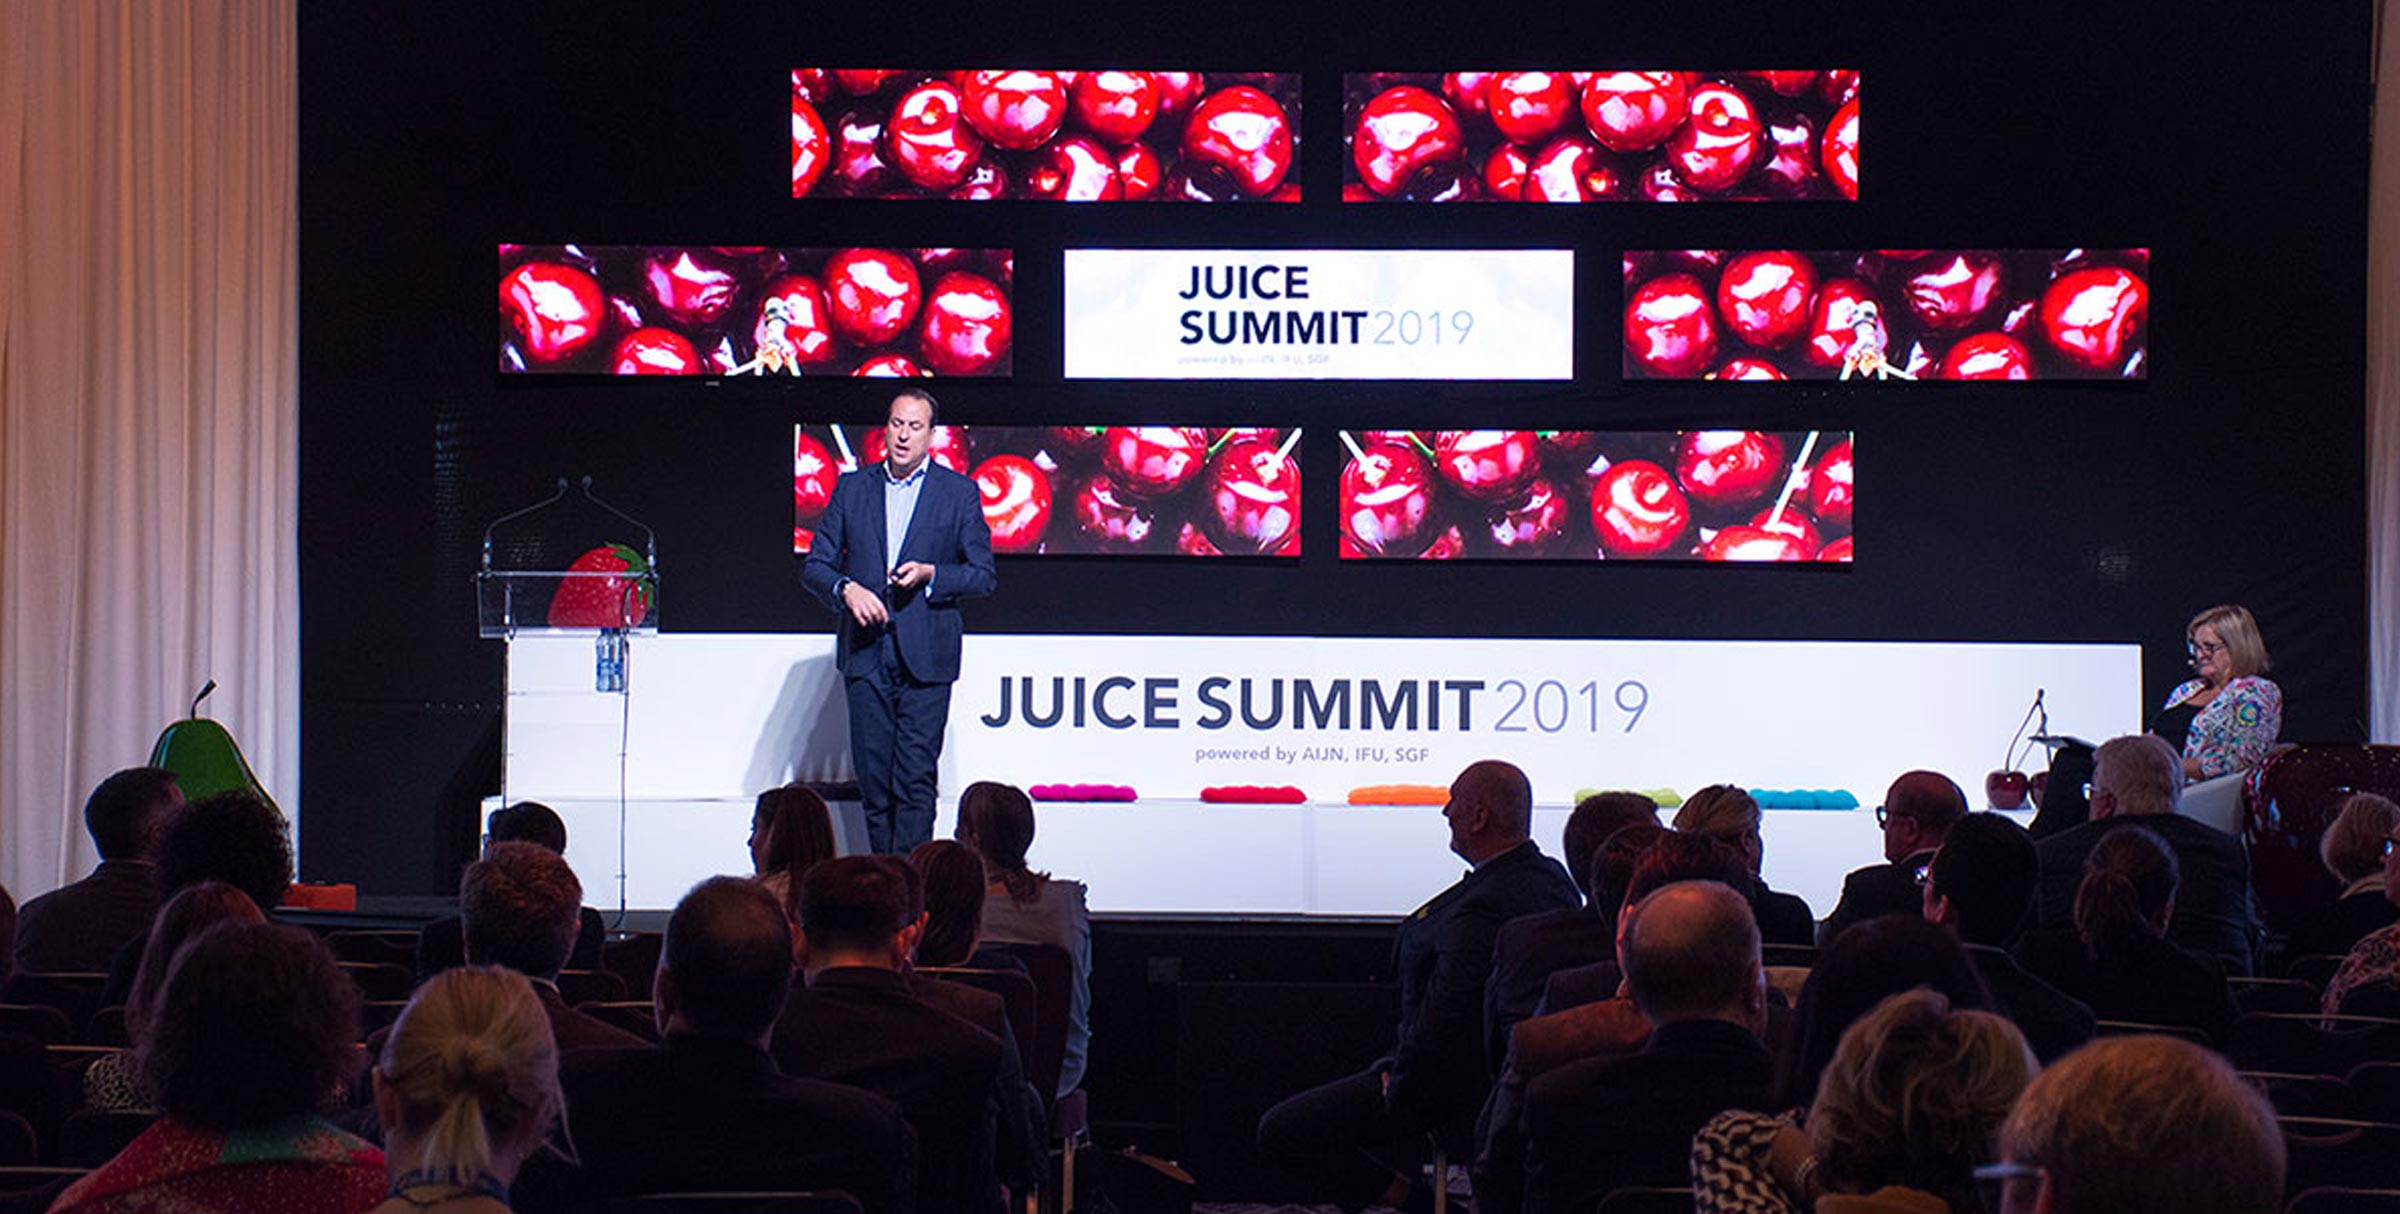 Juice Summit 2019